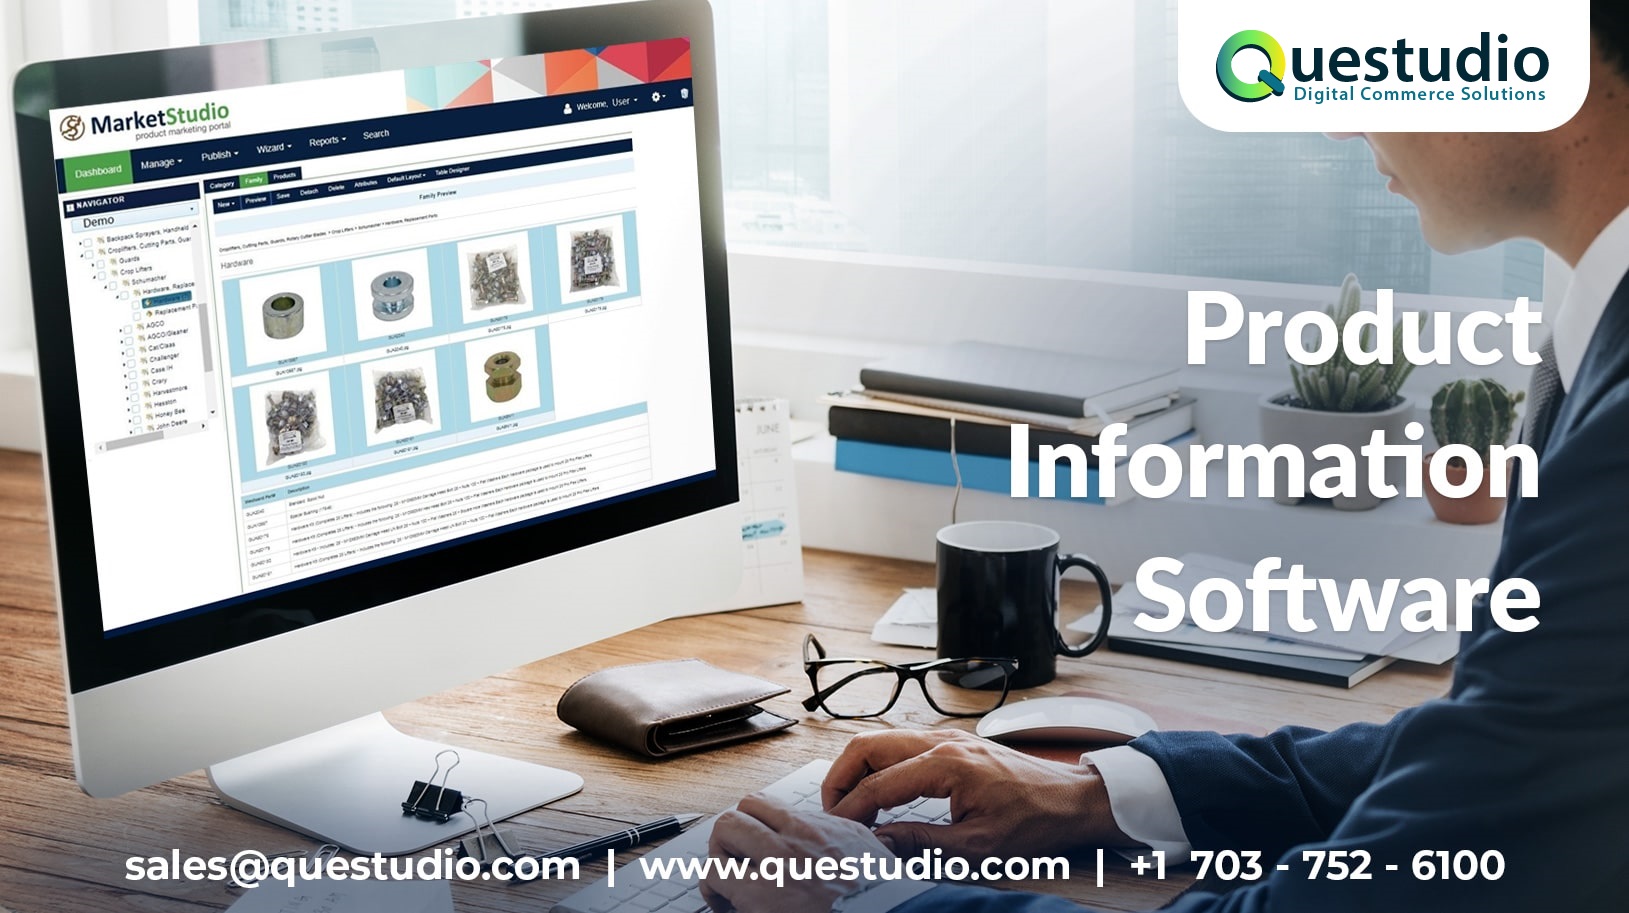 Product-Information-Software-questudio